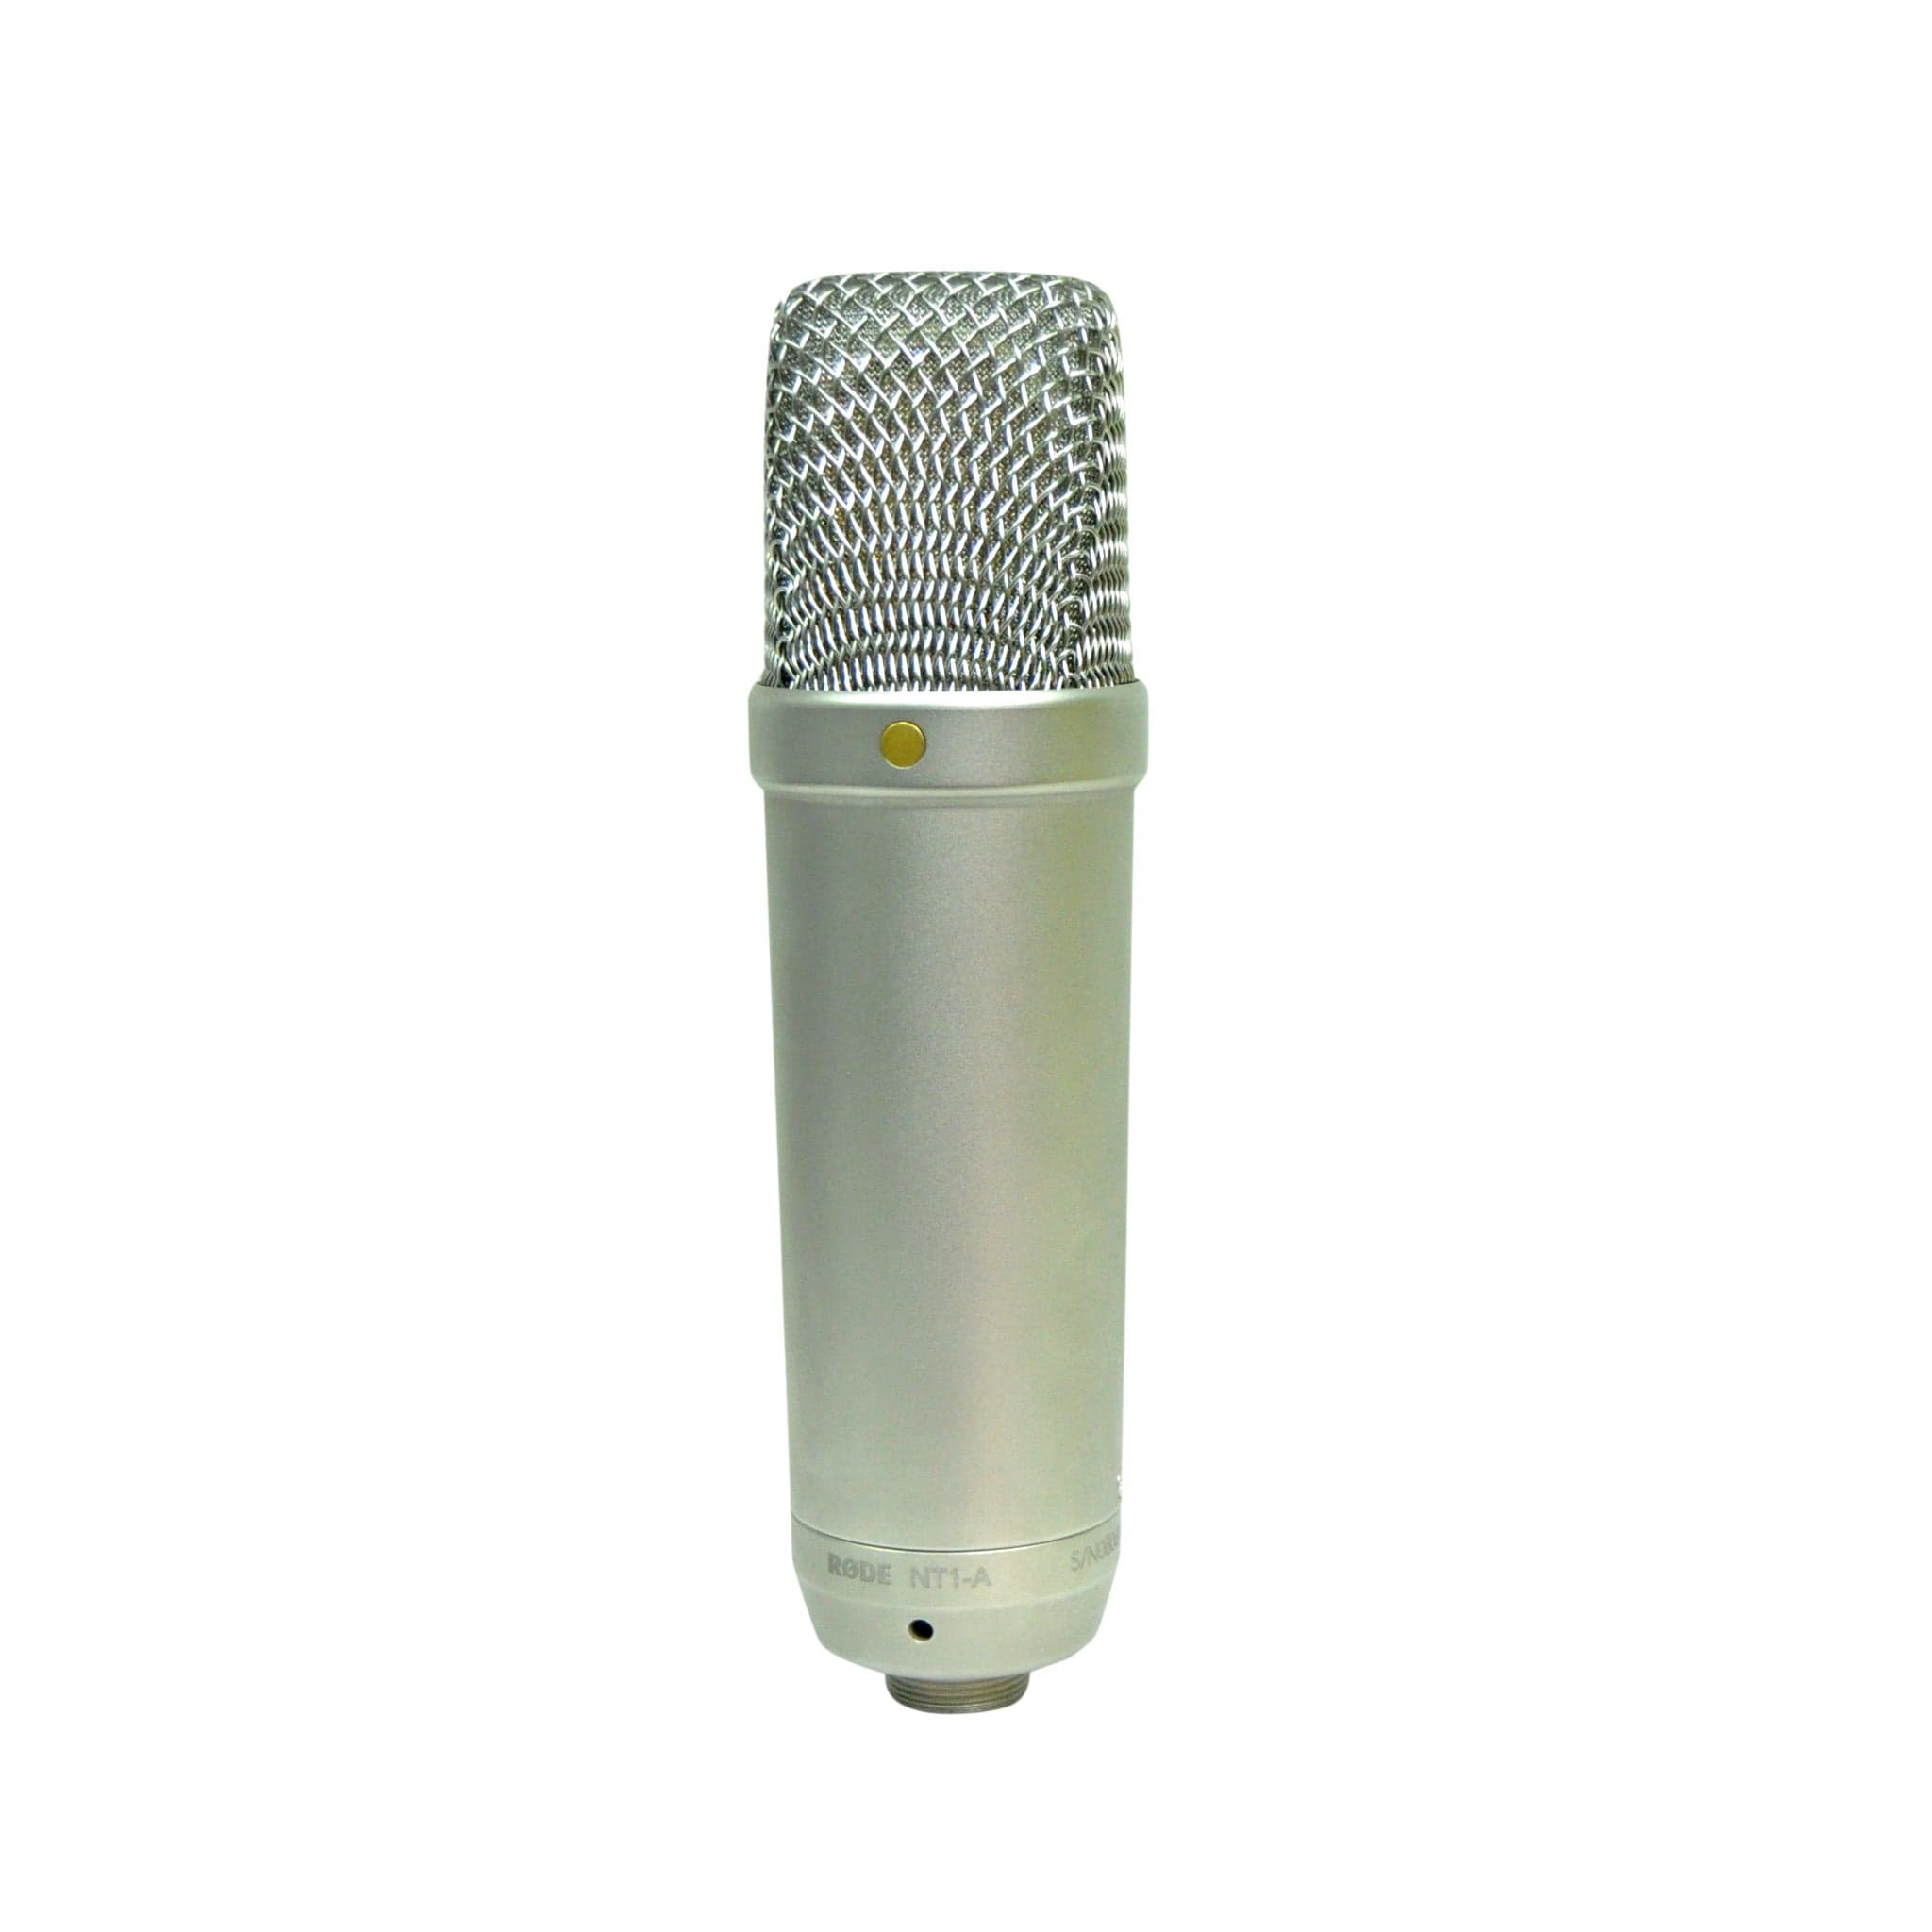 RØDE NT1-A - Cardioid Condenser Microphone